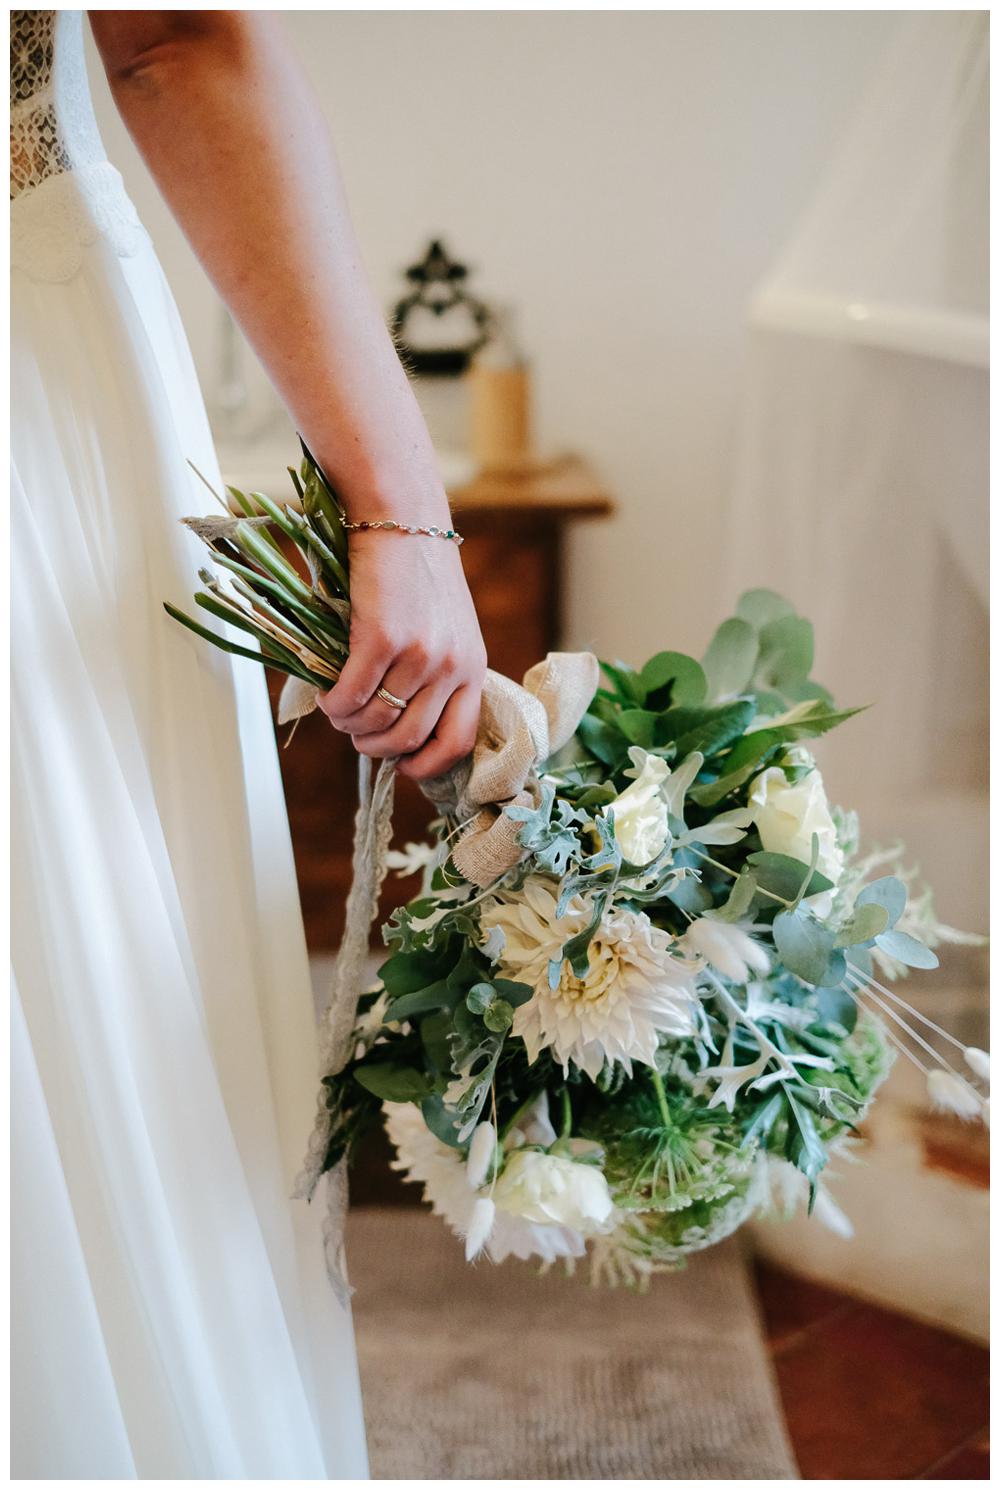 wedding bouquet from french florist les ideales #lesideales #weddingbouquet #bohochic #frenchwedding #florist